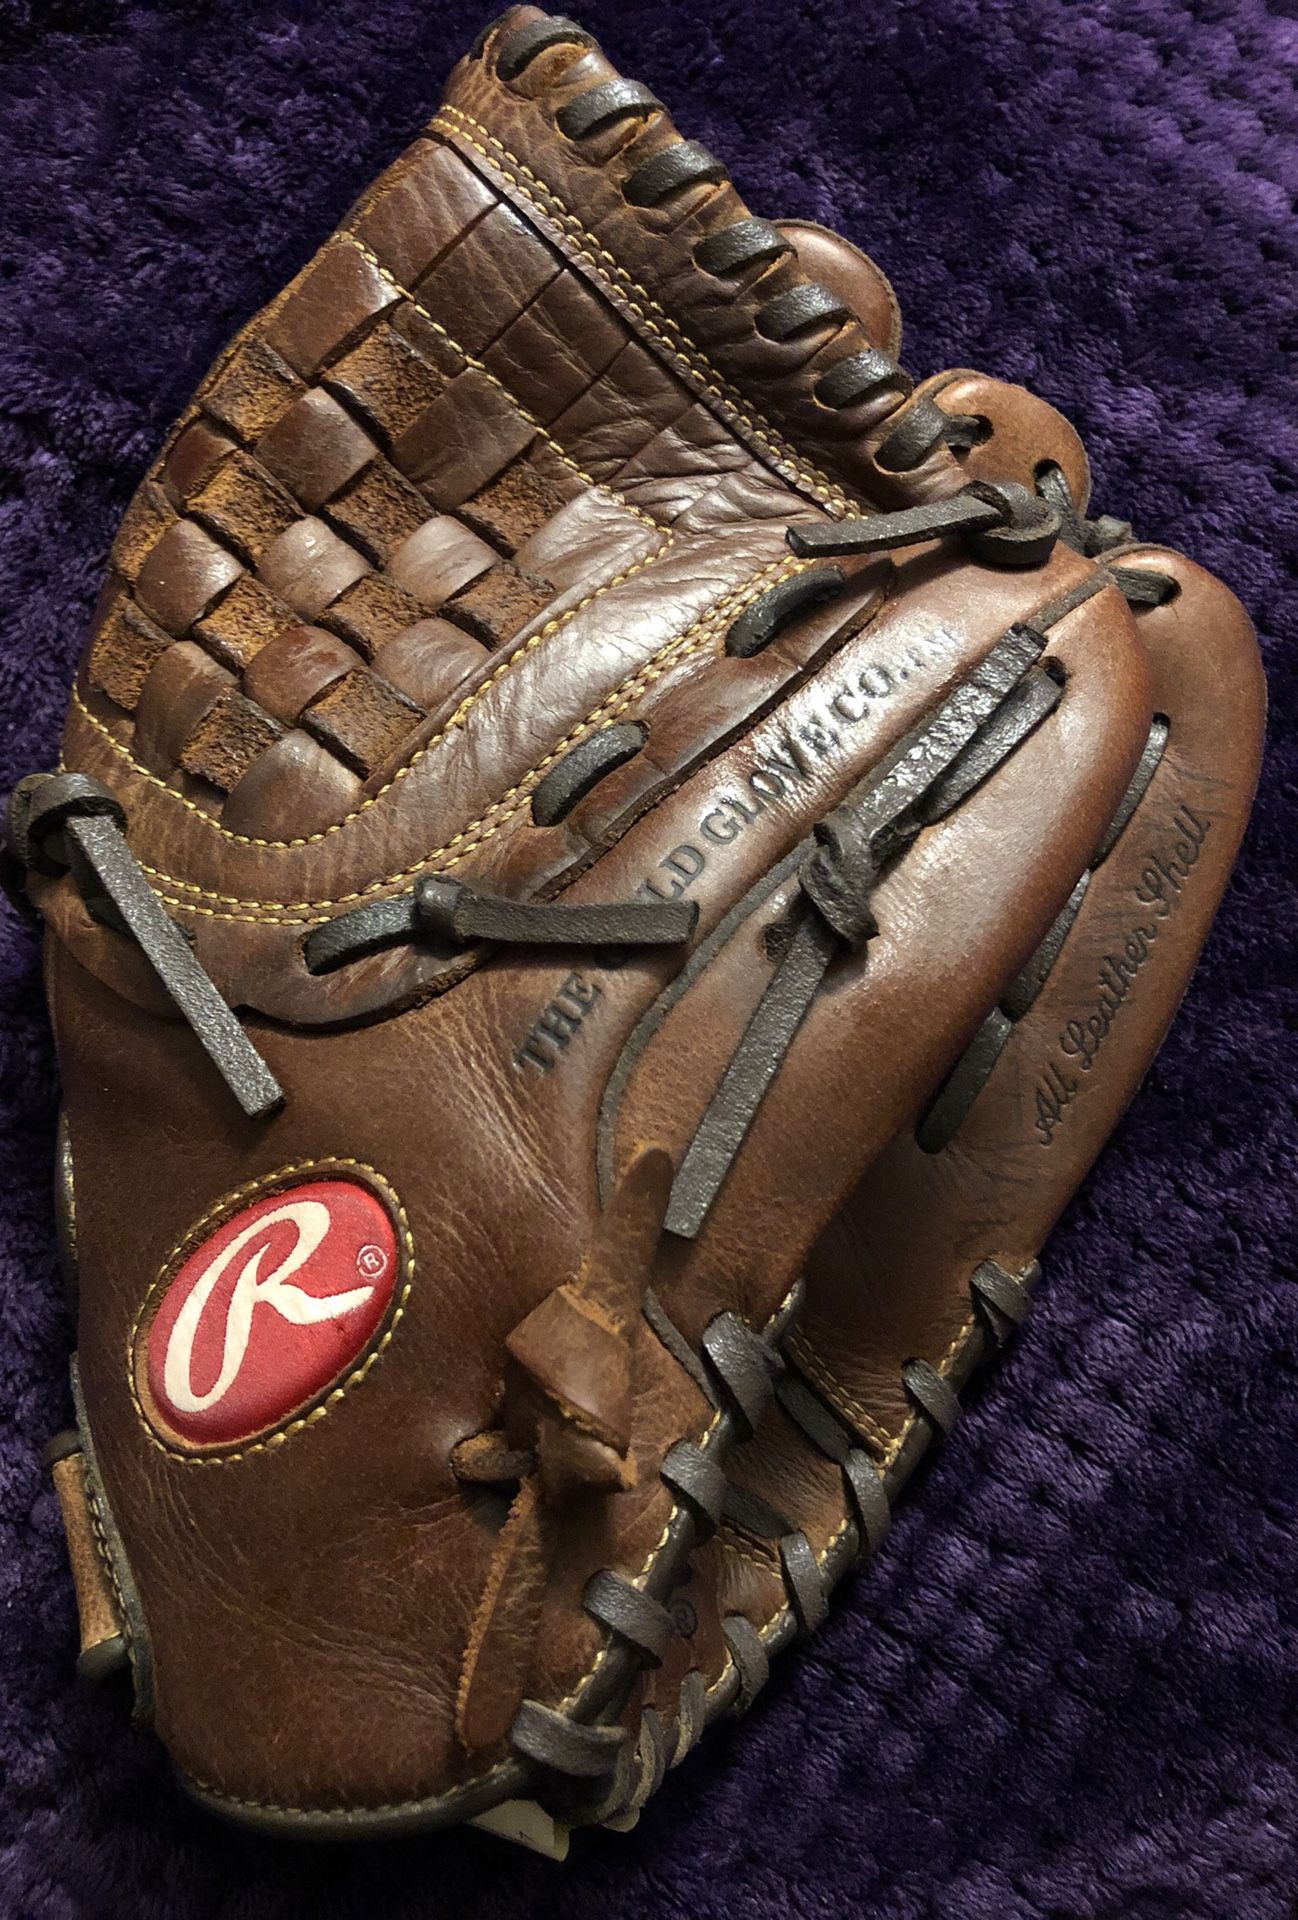 Rawlings Player Preferred Baseball Glove